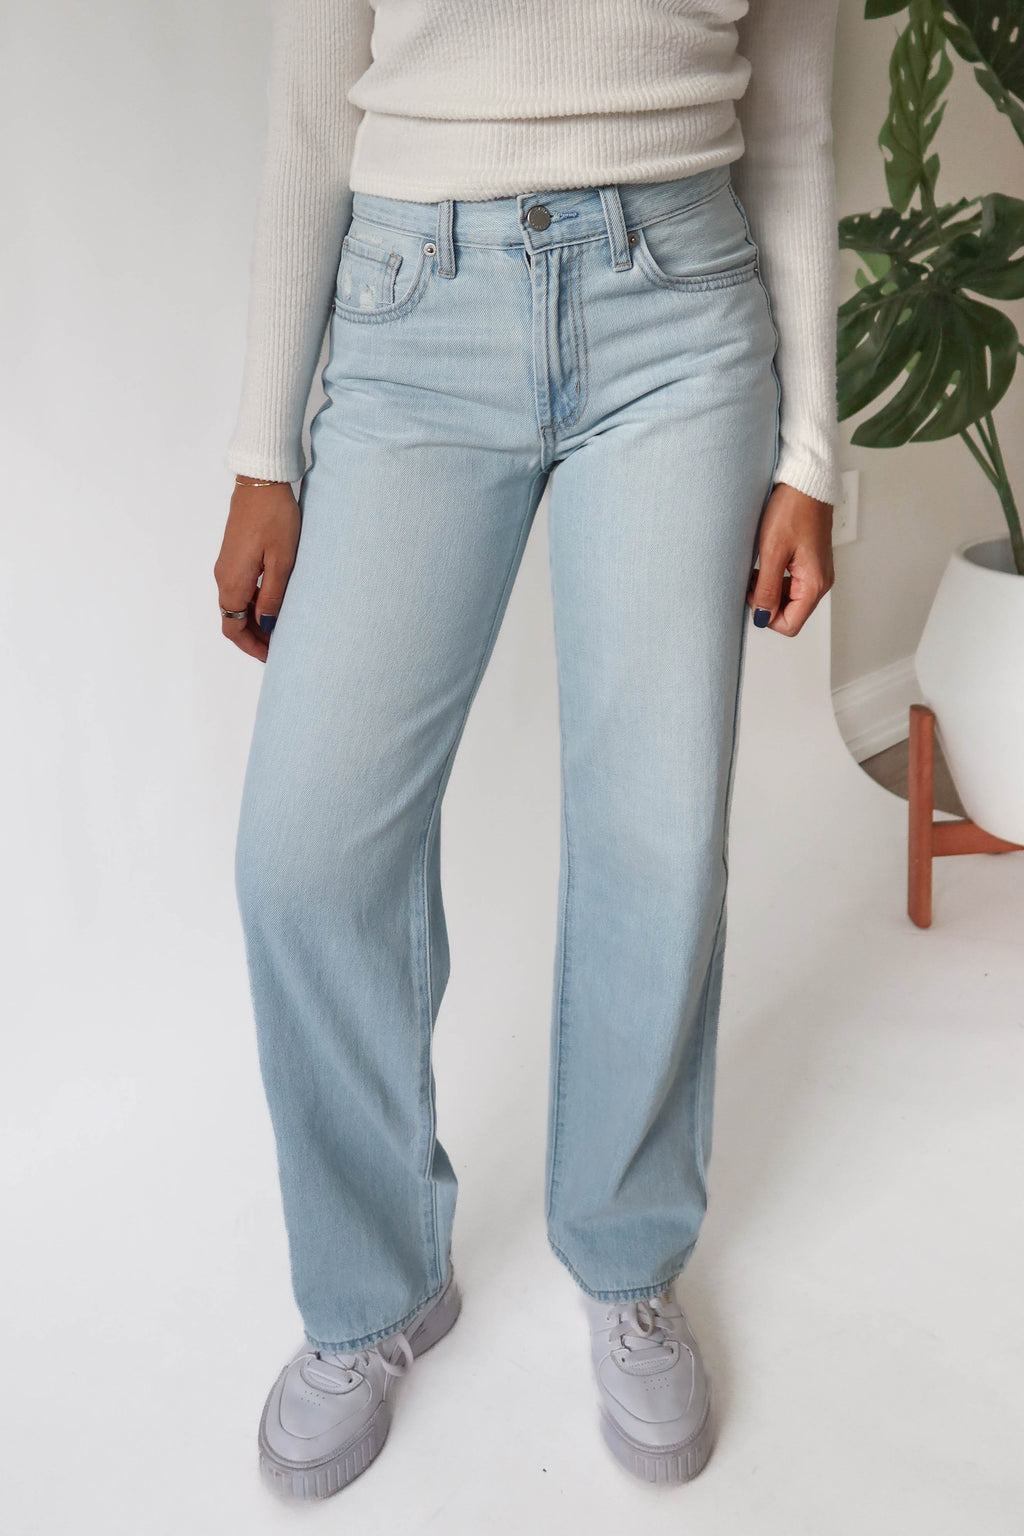 Halston Jeans – Grey Bandit